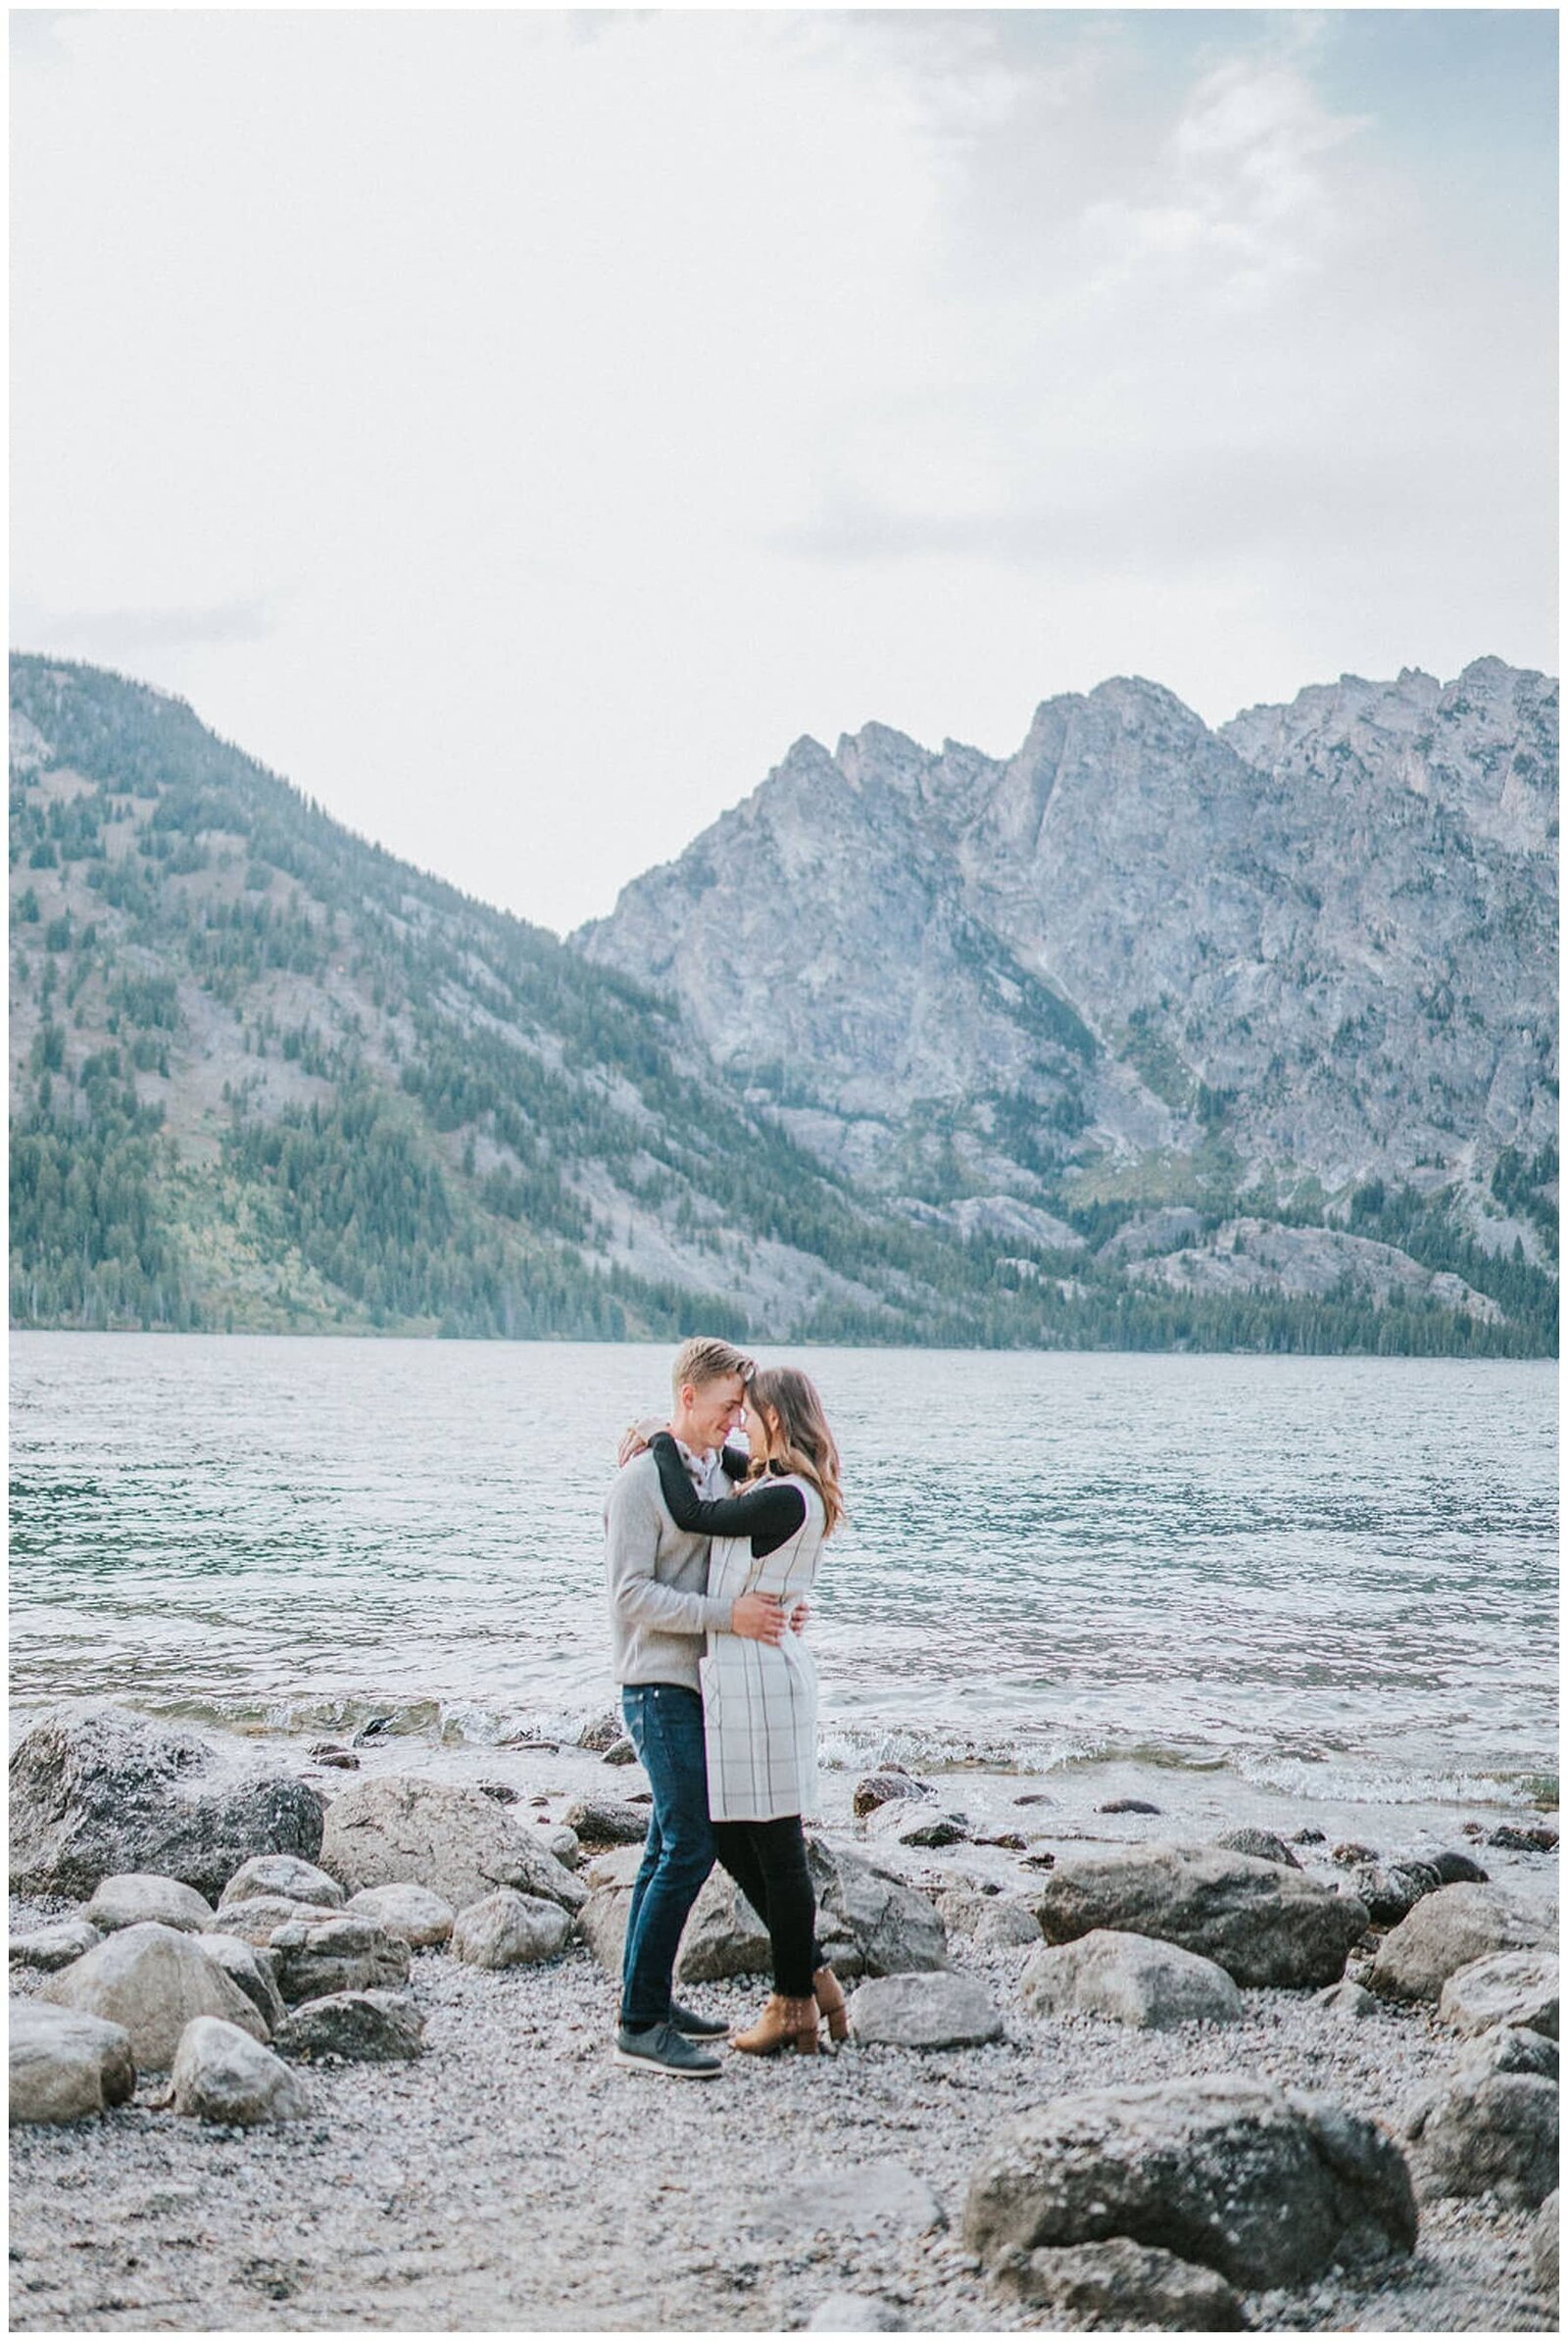 Sacramento Wedding Photographer captures couple embracing lakeside during engagement photos